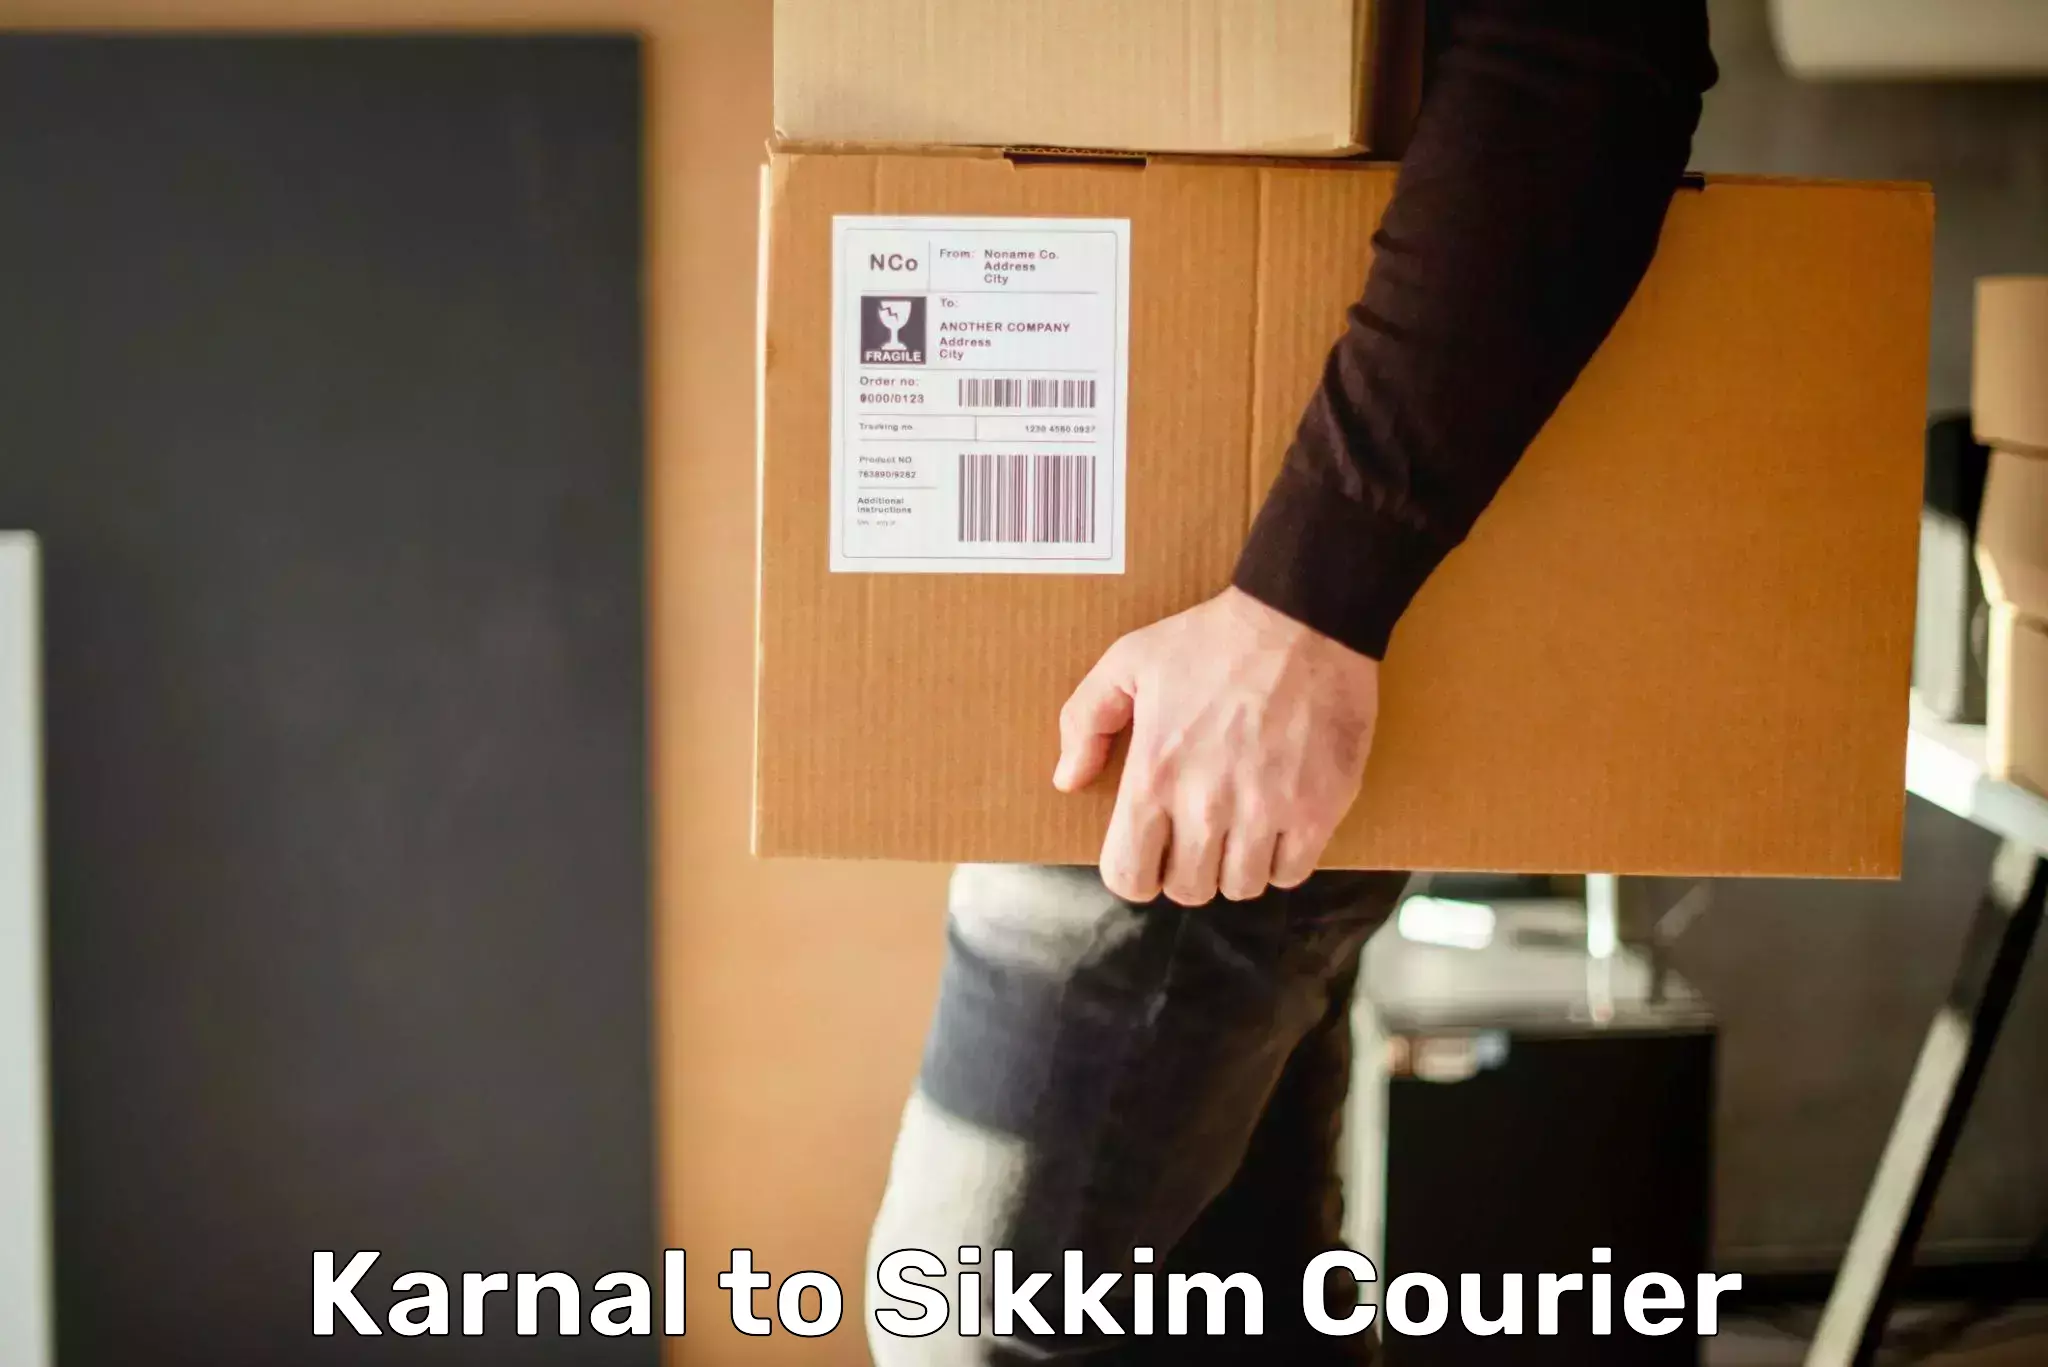 Bulk shipment Karnal to Rangpo